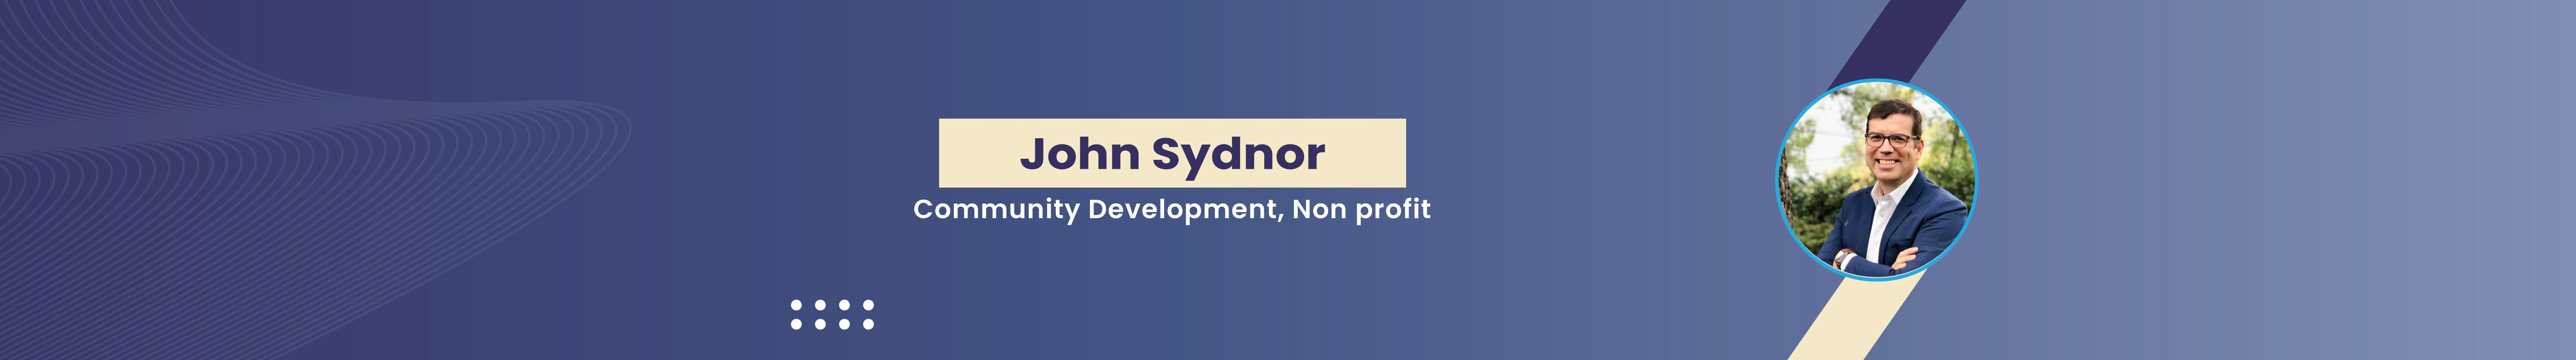 John Sydnor's profile banner